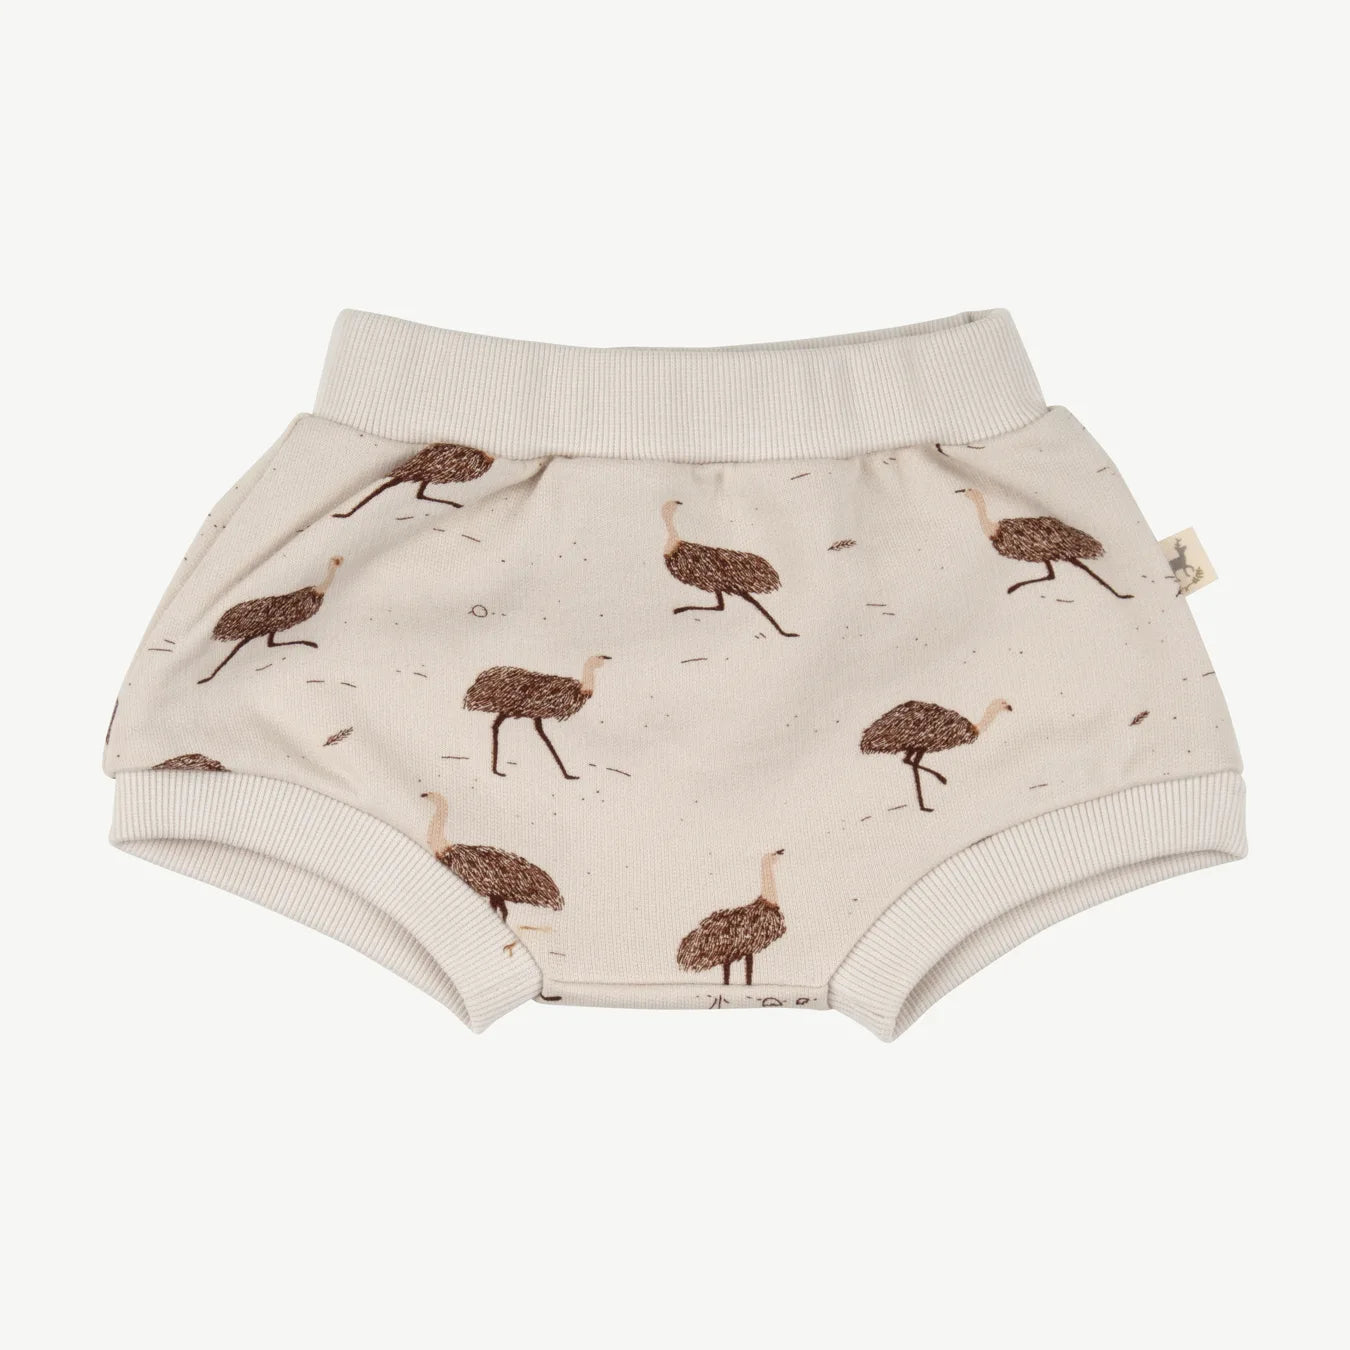 'emus everywhere' white sand shorts